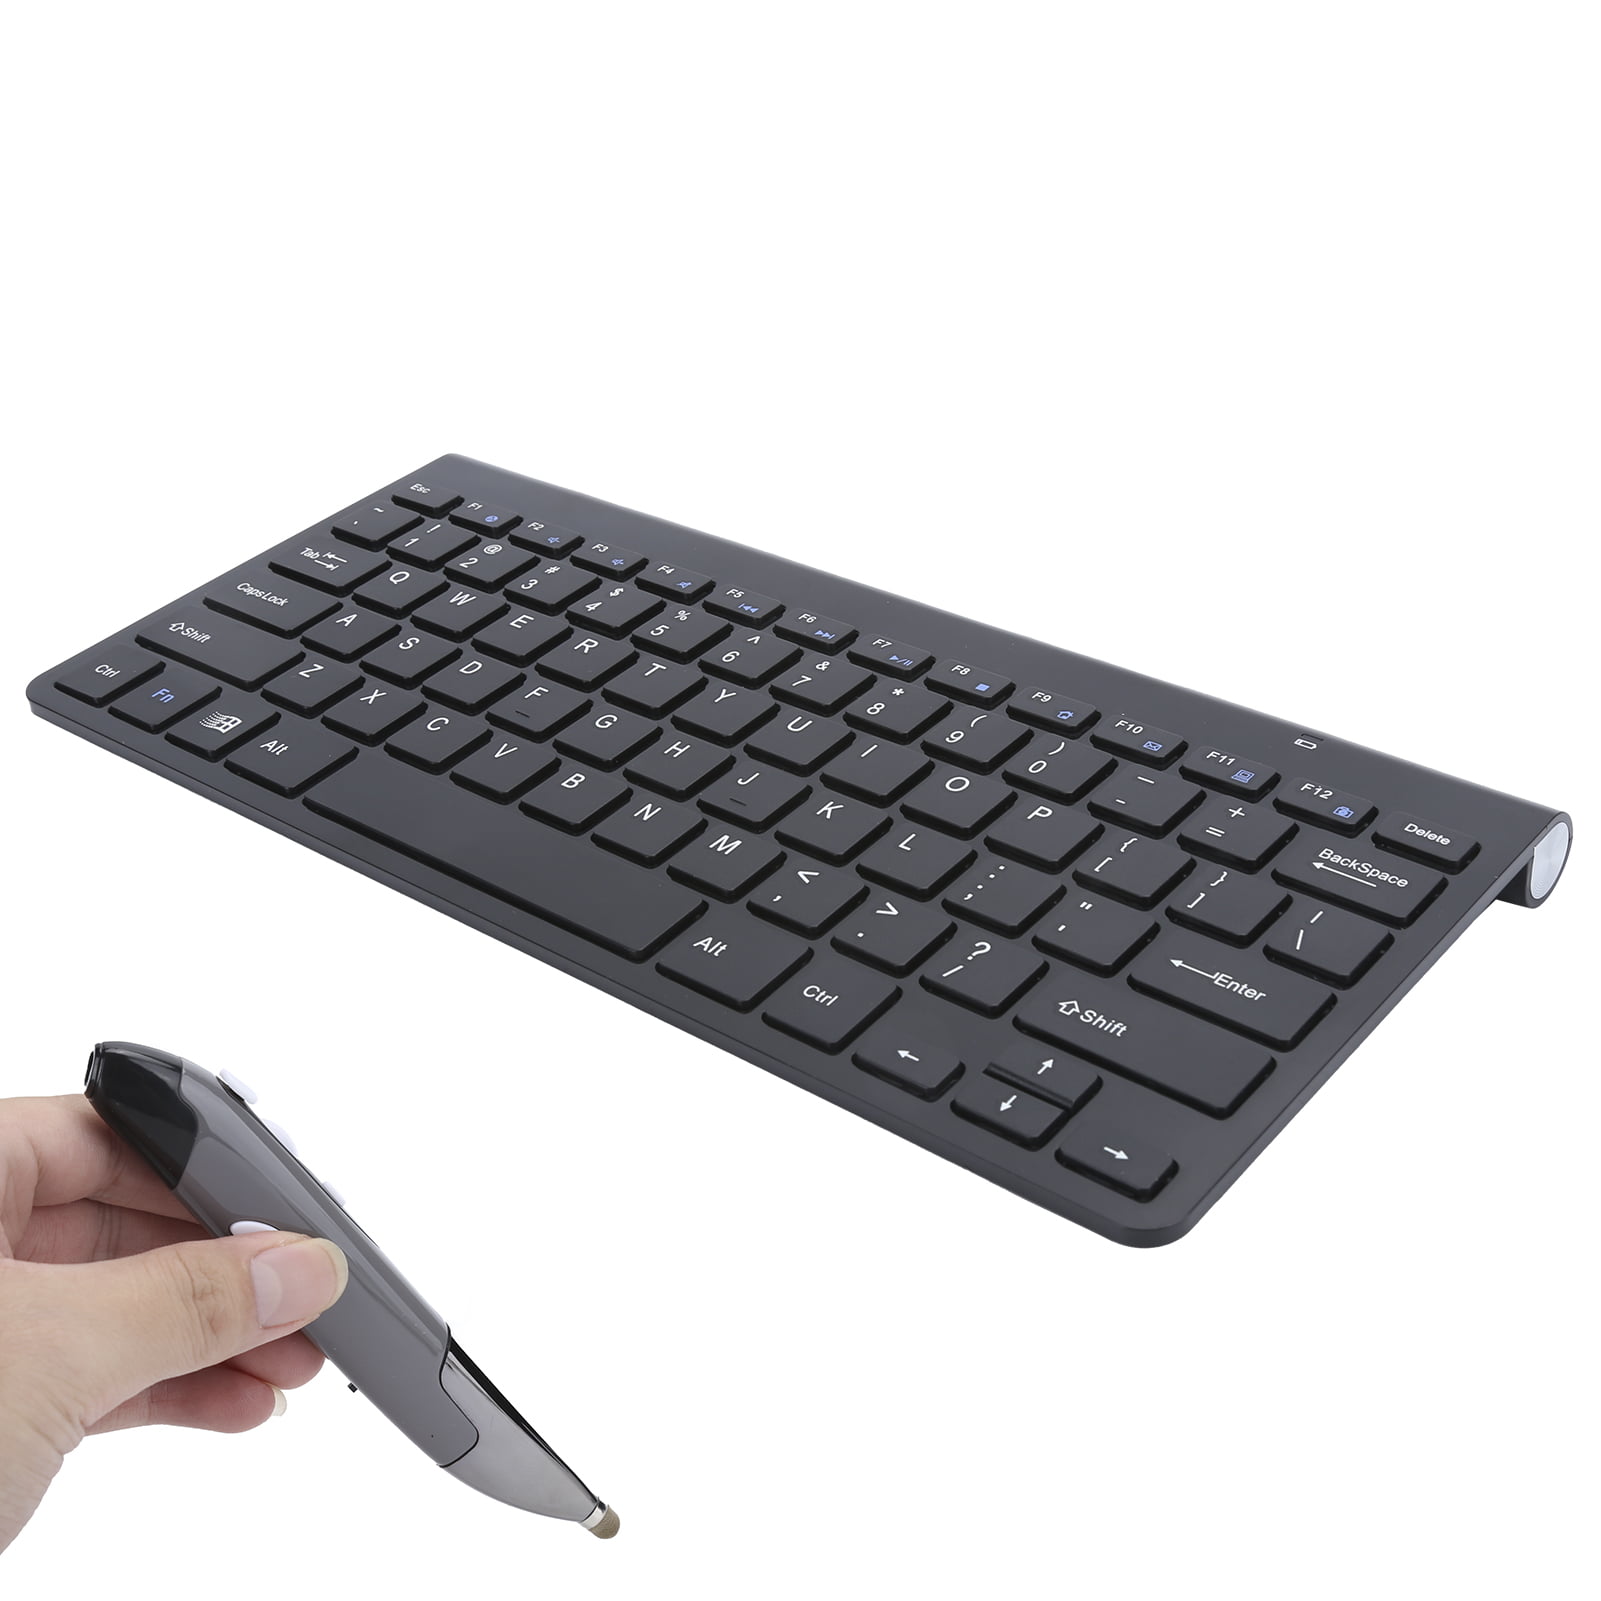 KM909 2.4GHz Pocket Pen Mouse Slim Ergonomic Design Optical Wireless Handwriting Mice for Phone Laptop